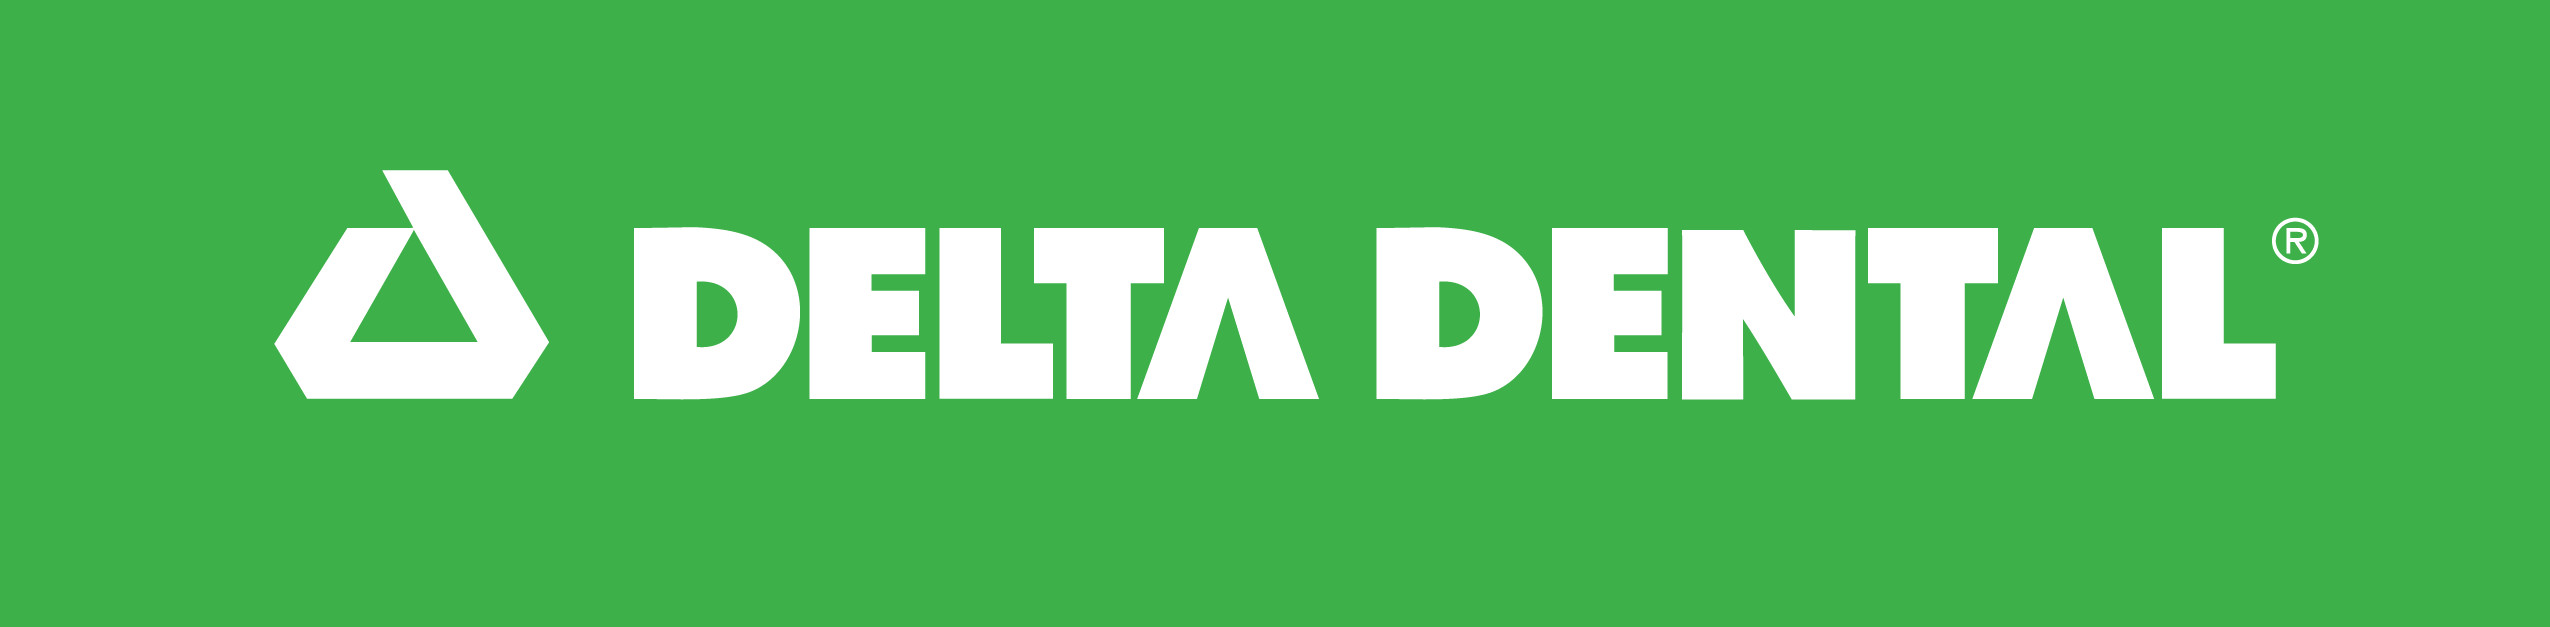 Delta Dental Green Logo (RGB) (1)